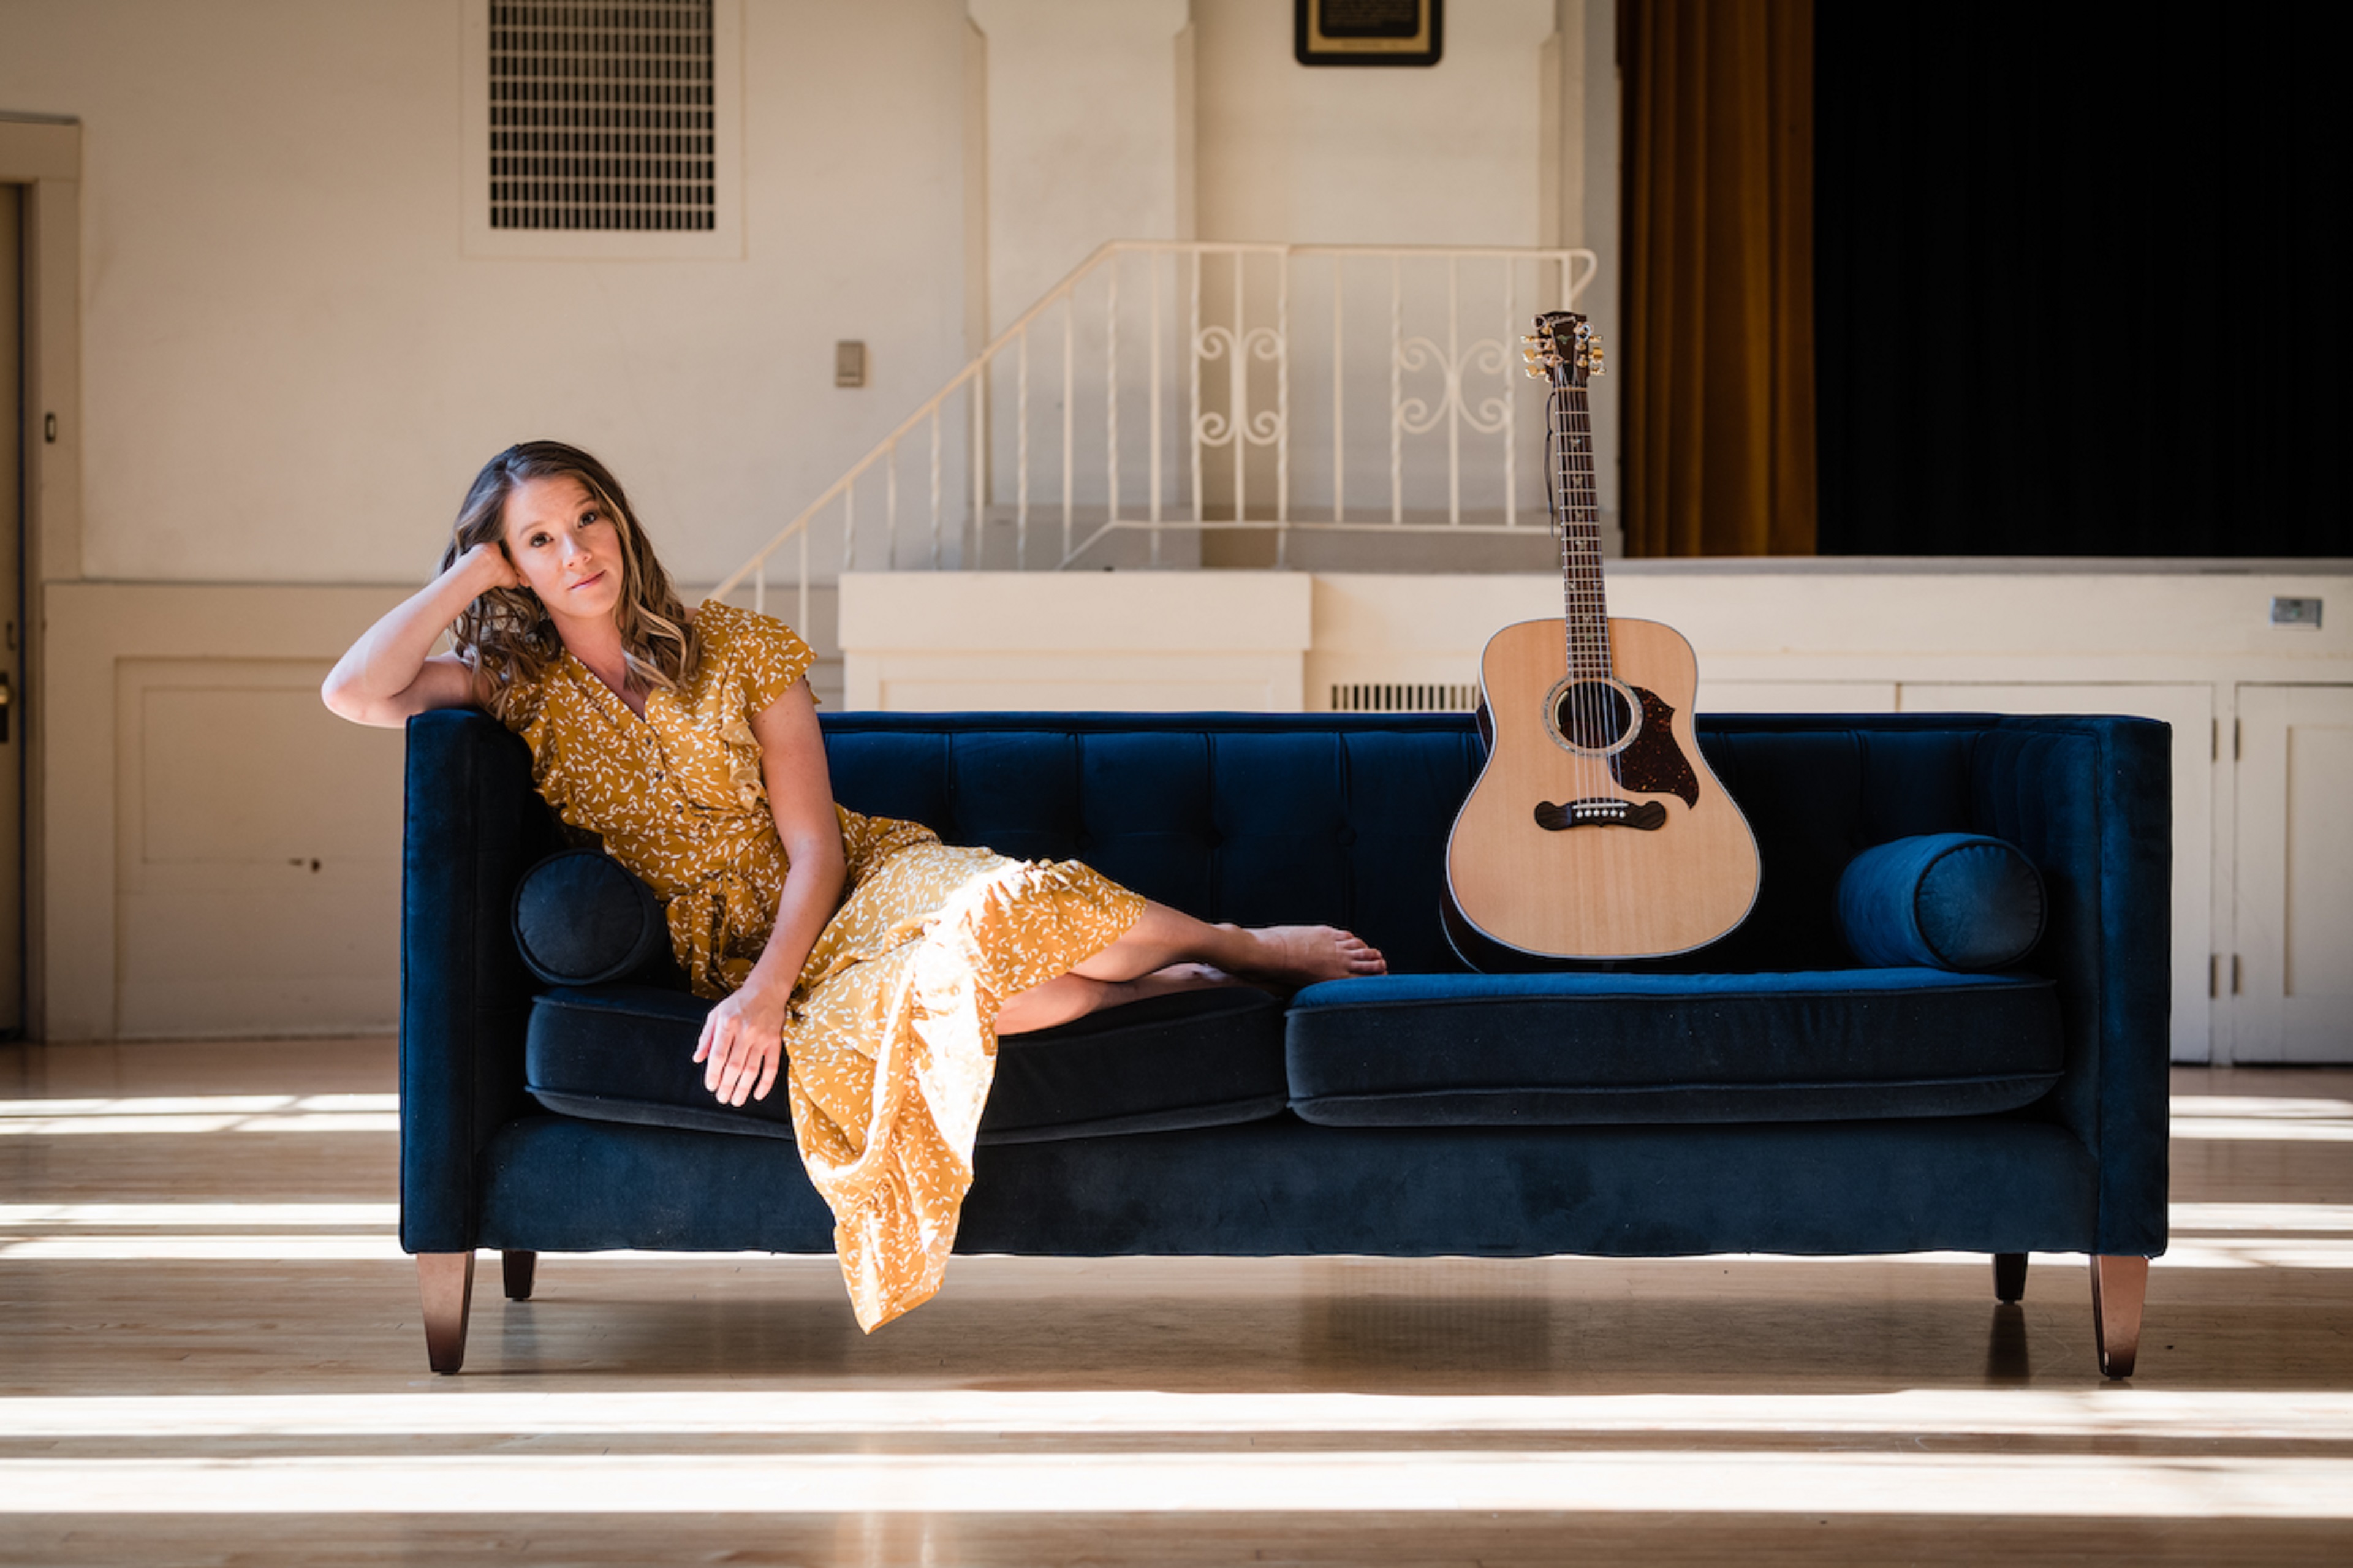 Alicia Stockman's debut album 'These Four Walls' drops November 2021